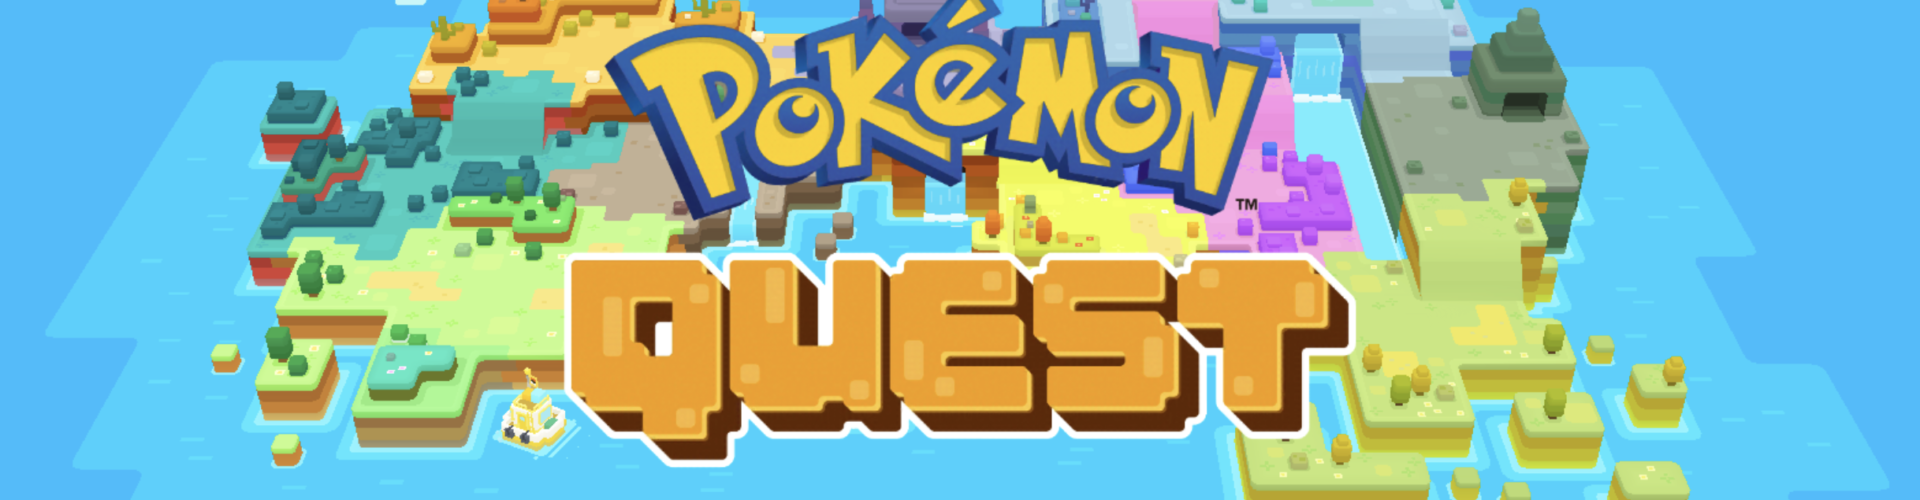 Beau’s Number 1 App Review: Pokemon Quest